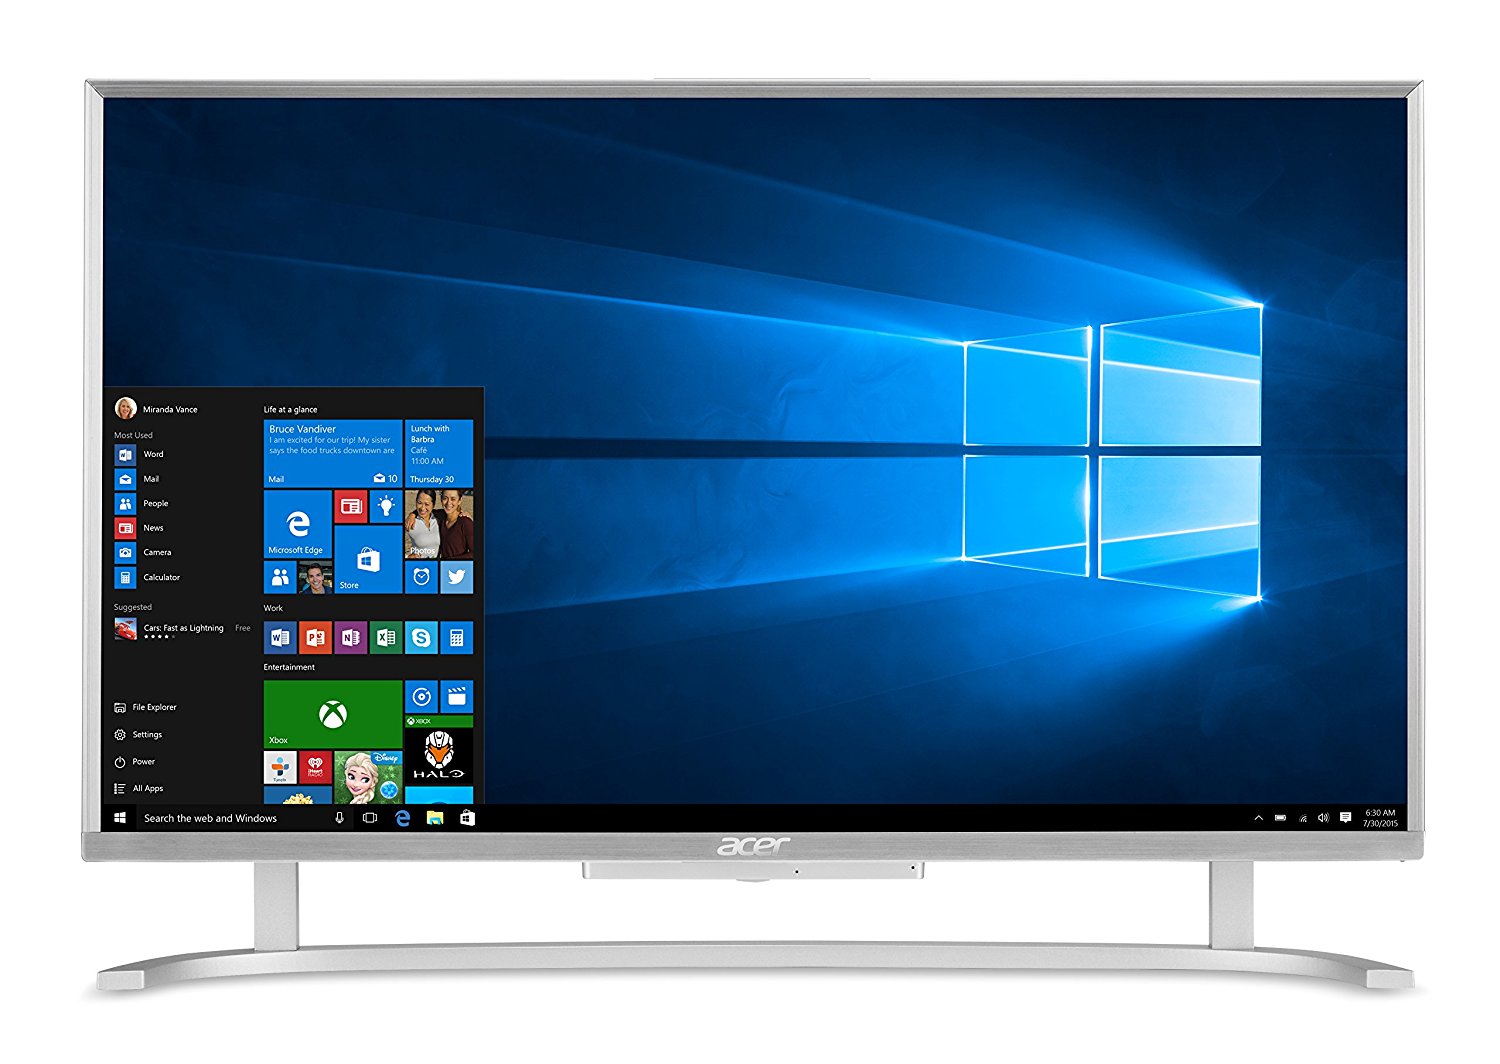 Моноблок Acer Aspire C22-760, Intel Core i3 6100U, 2300 МГц, 4096 Мб, 1000 Гб, Intel HD Graphics 520, без привода, Wi-Fi, Bluetooth, Windows 10 Home